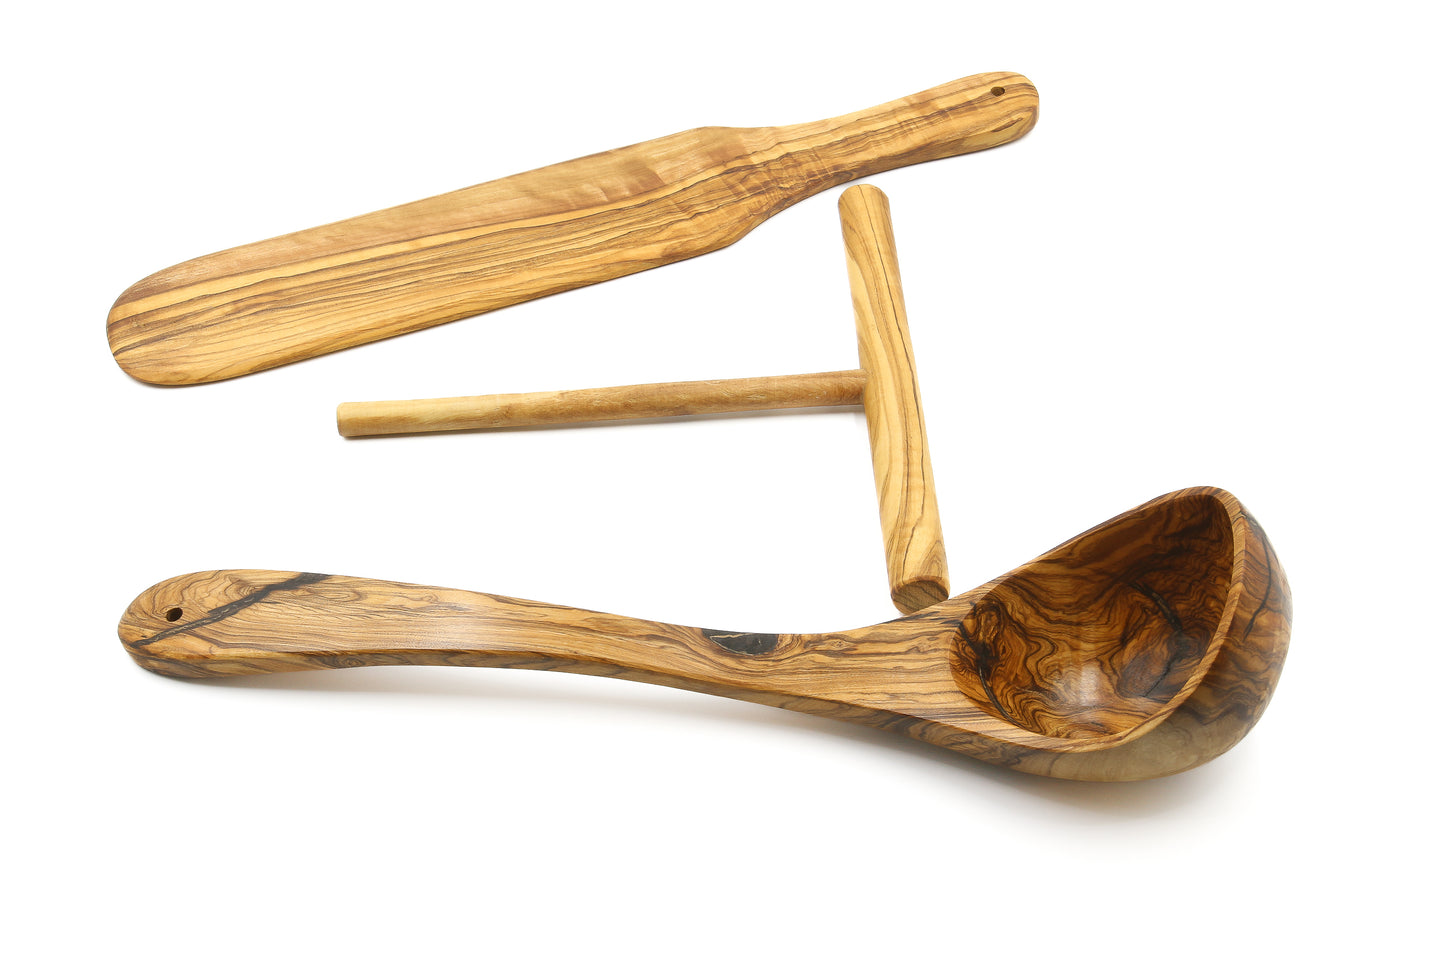 Handcrafted olive wood set designed for professional crepe and pancake preparation